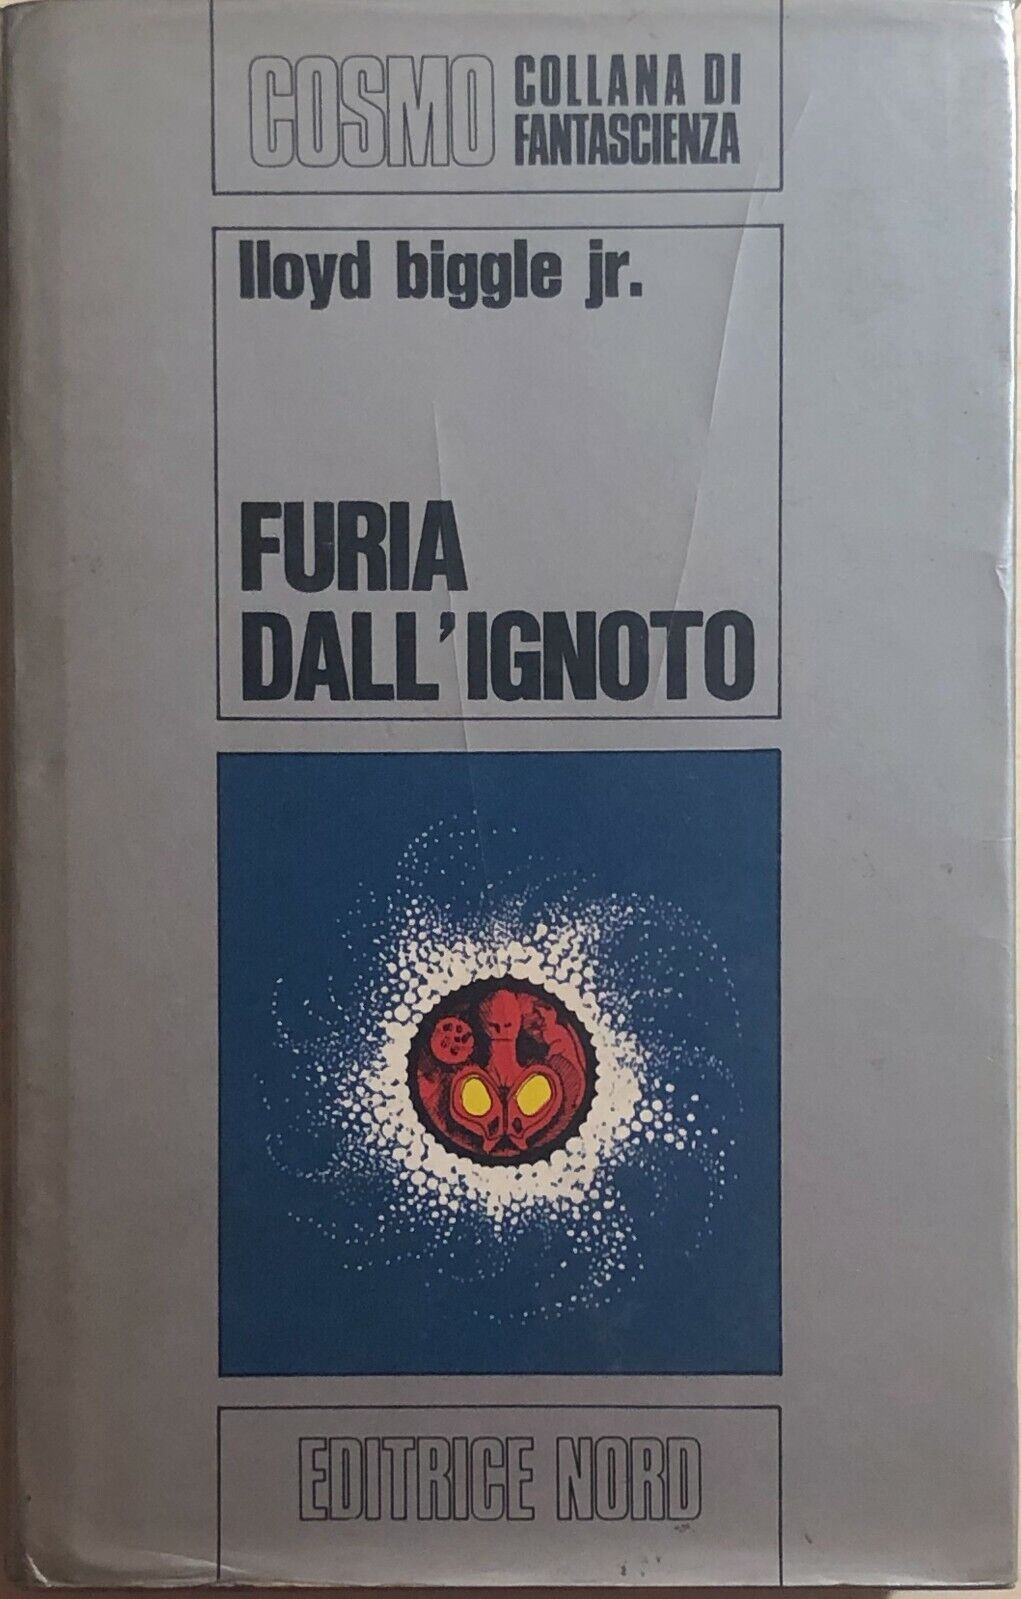 Furia dalL'ignoto di Lloyd Biggle Jr., 1970, Editrice Nord